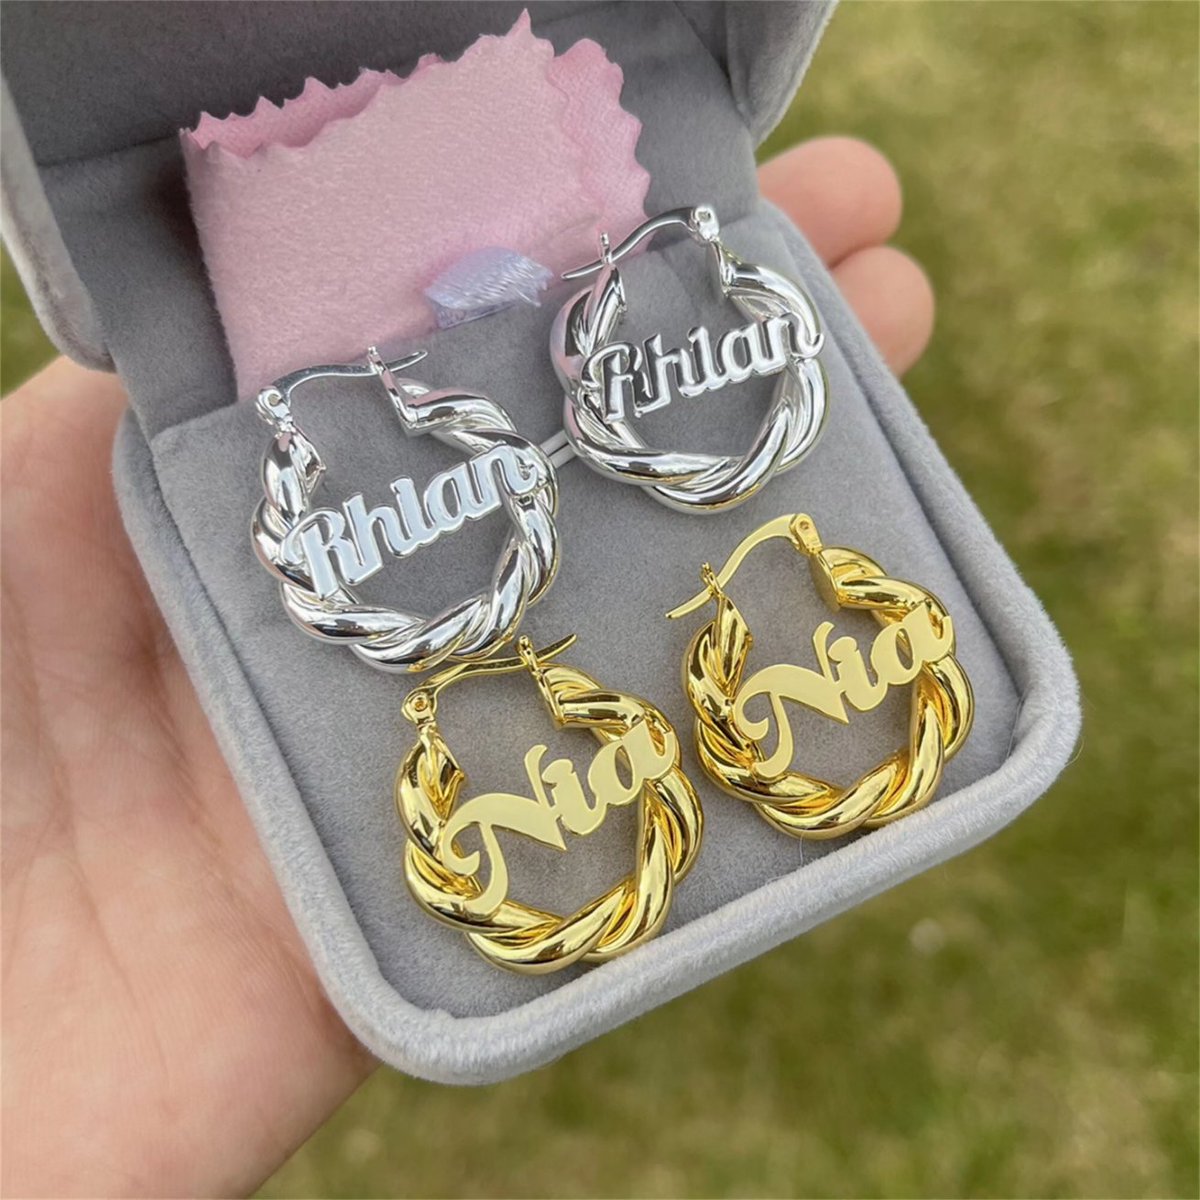 beautiful small earrings hoops
the size is 18mm, only $13 for one set🤩
it's a good choice for children💕
#earrings#kidsearring
#smallearrings #earringshoops #rosegoldearrings #g
#silverearrings #nameearrings #heartearrings #hiphopjewelry